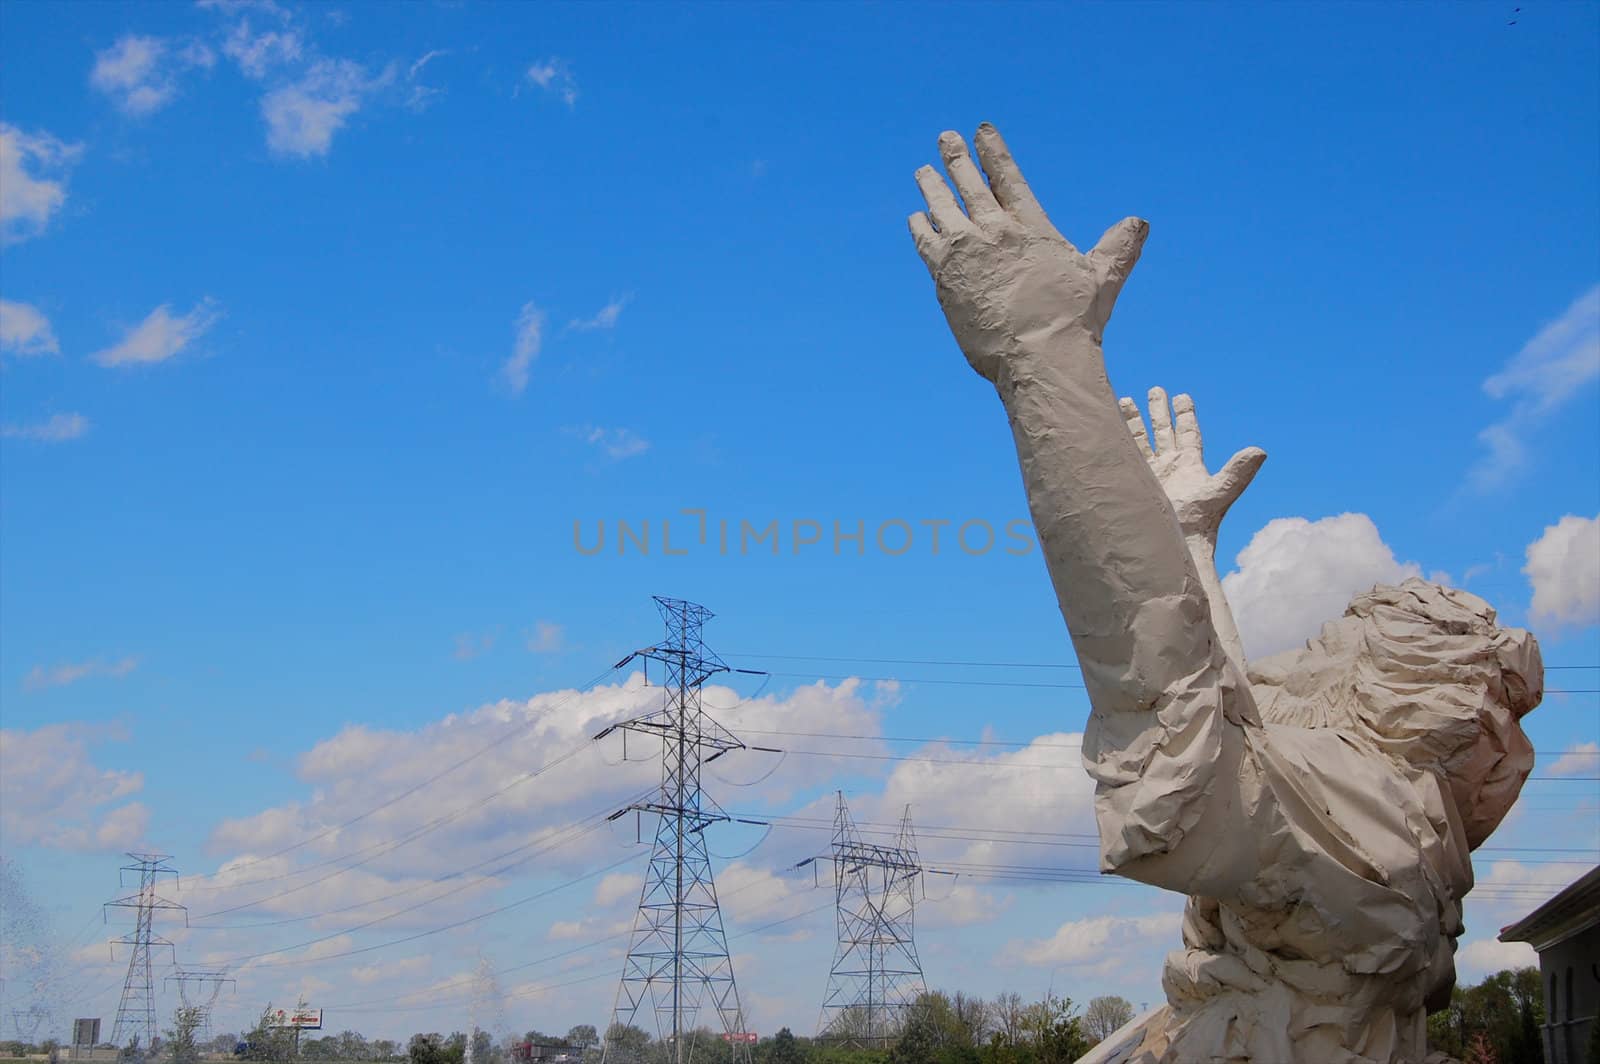 "King of Kings" statue, Ohio by tyroneburkemedia@gmail.com